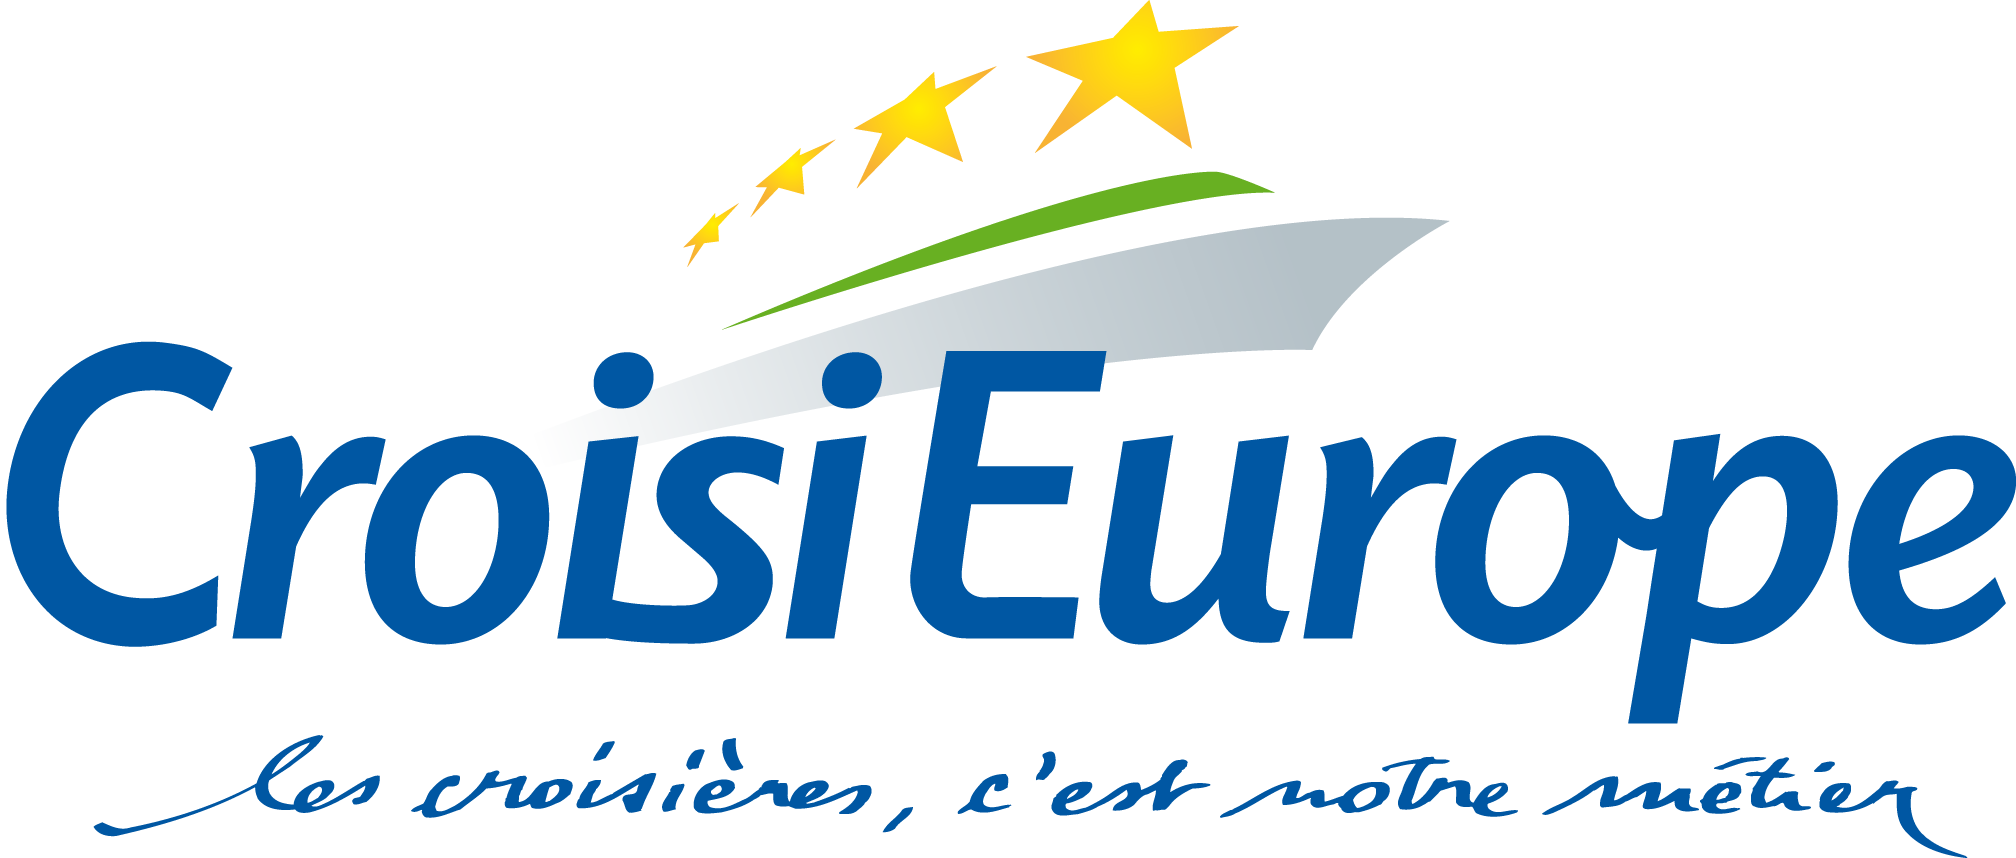 Logo Croisi Europe